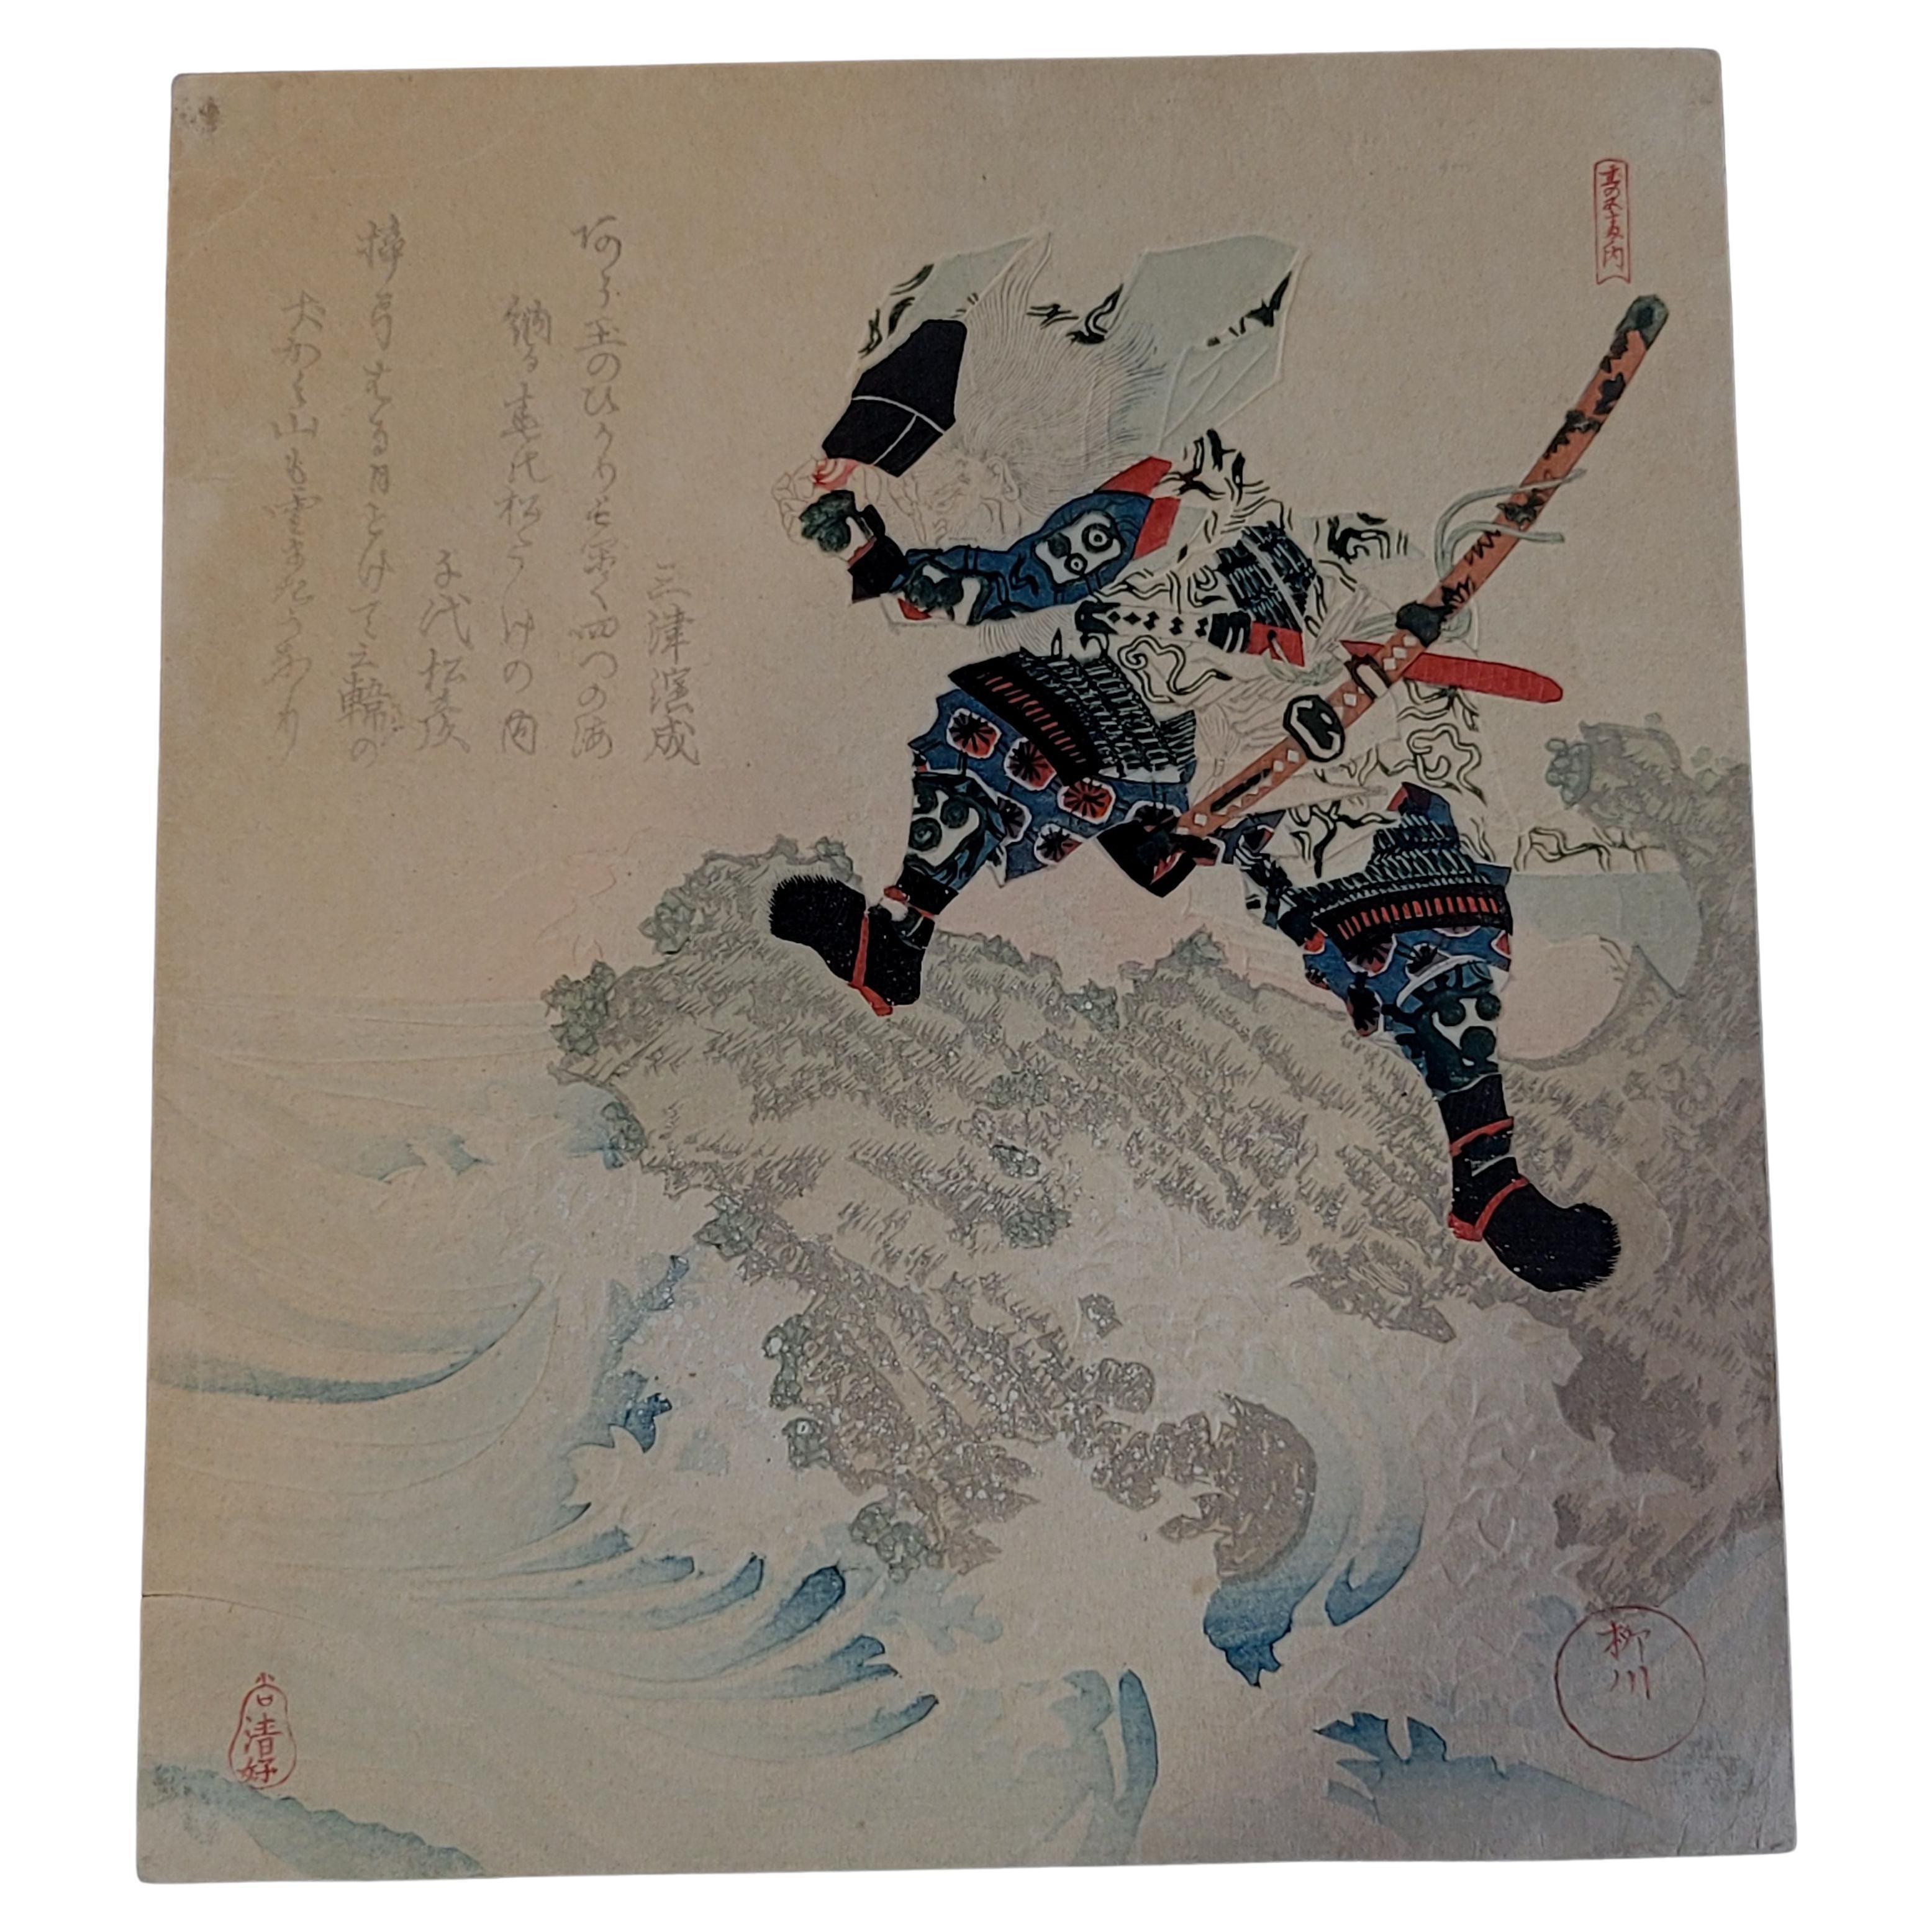 Japanese Woodblock Print by Yanagawa Shigenobu 柳川重信 '1787-1832' For Sale